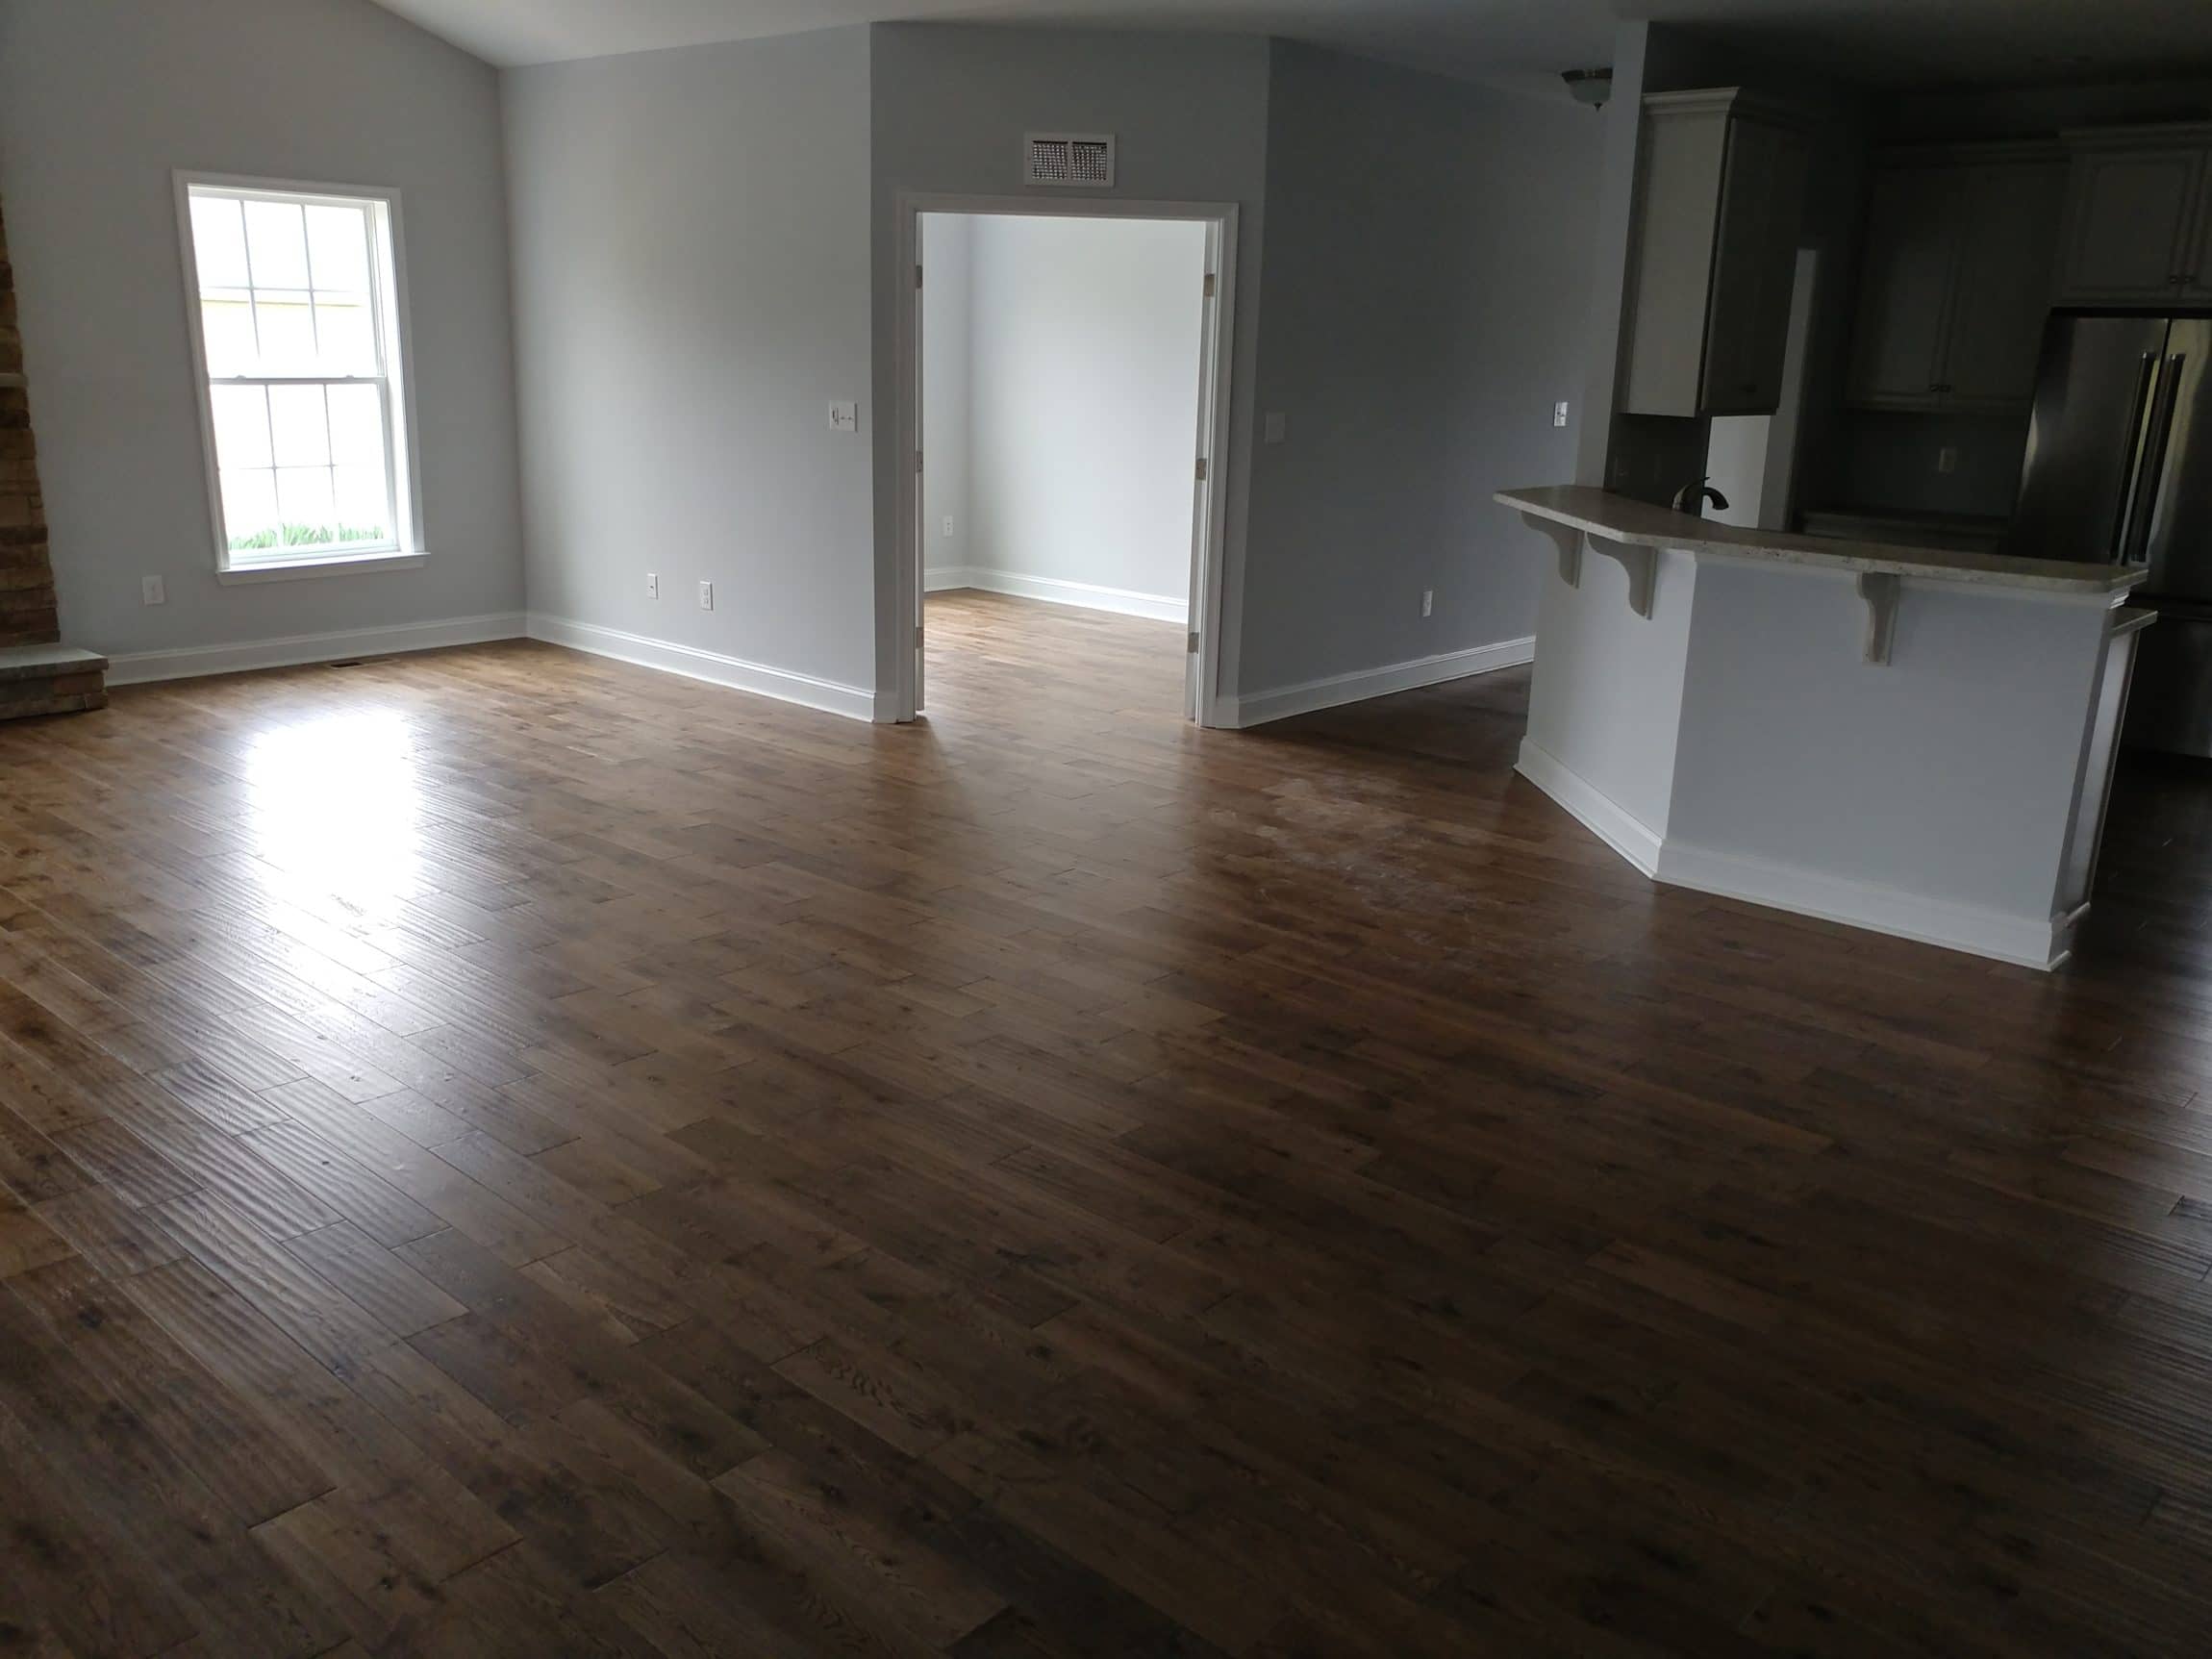 Oak Hardwood Floor Throughout the Home.